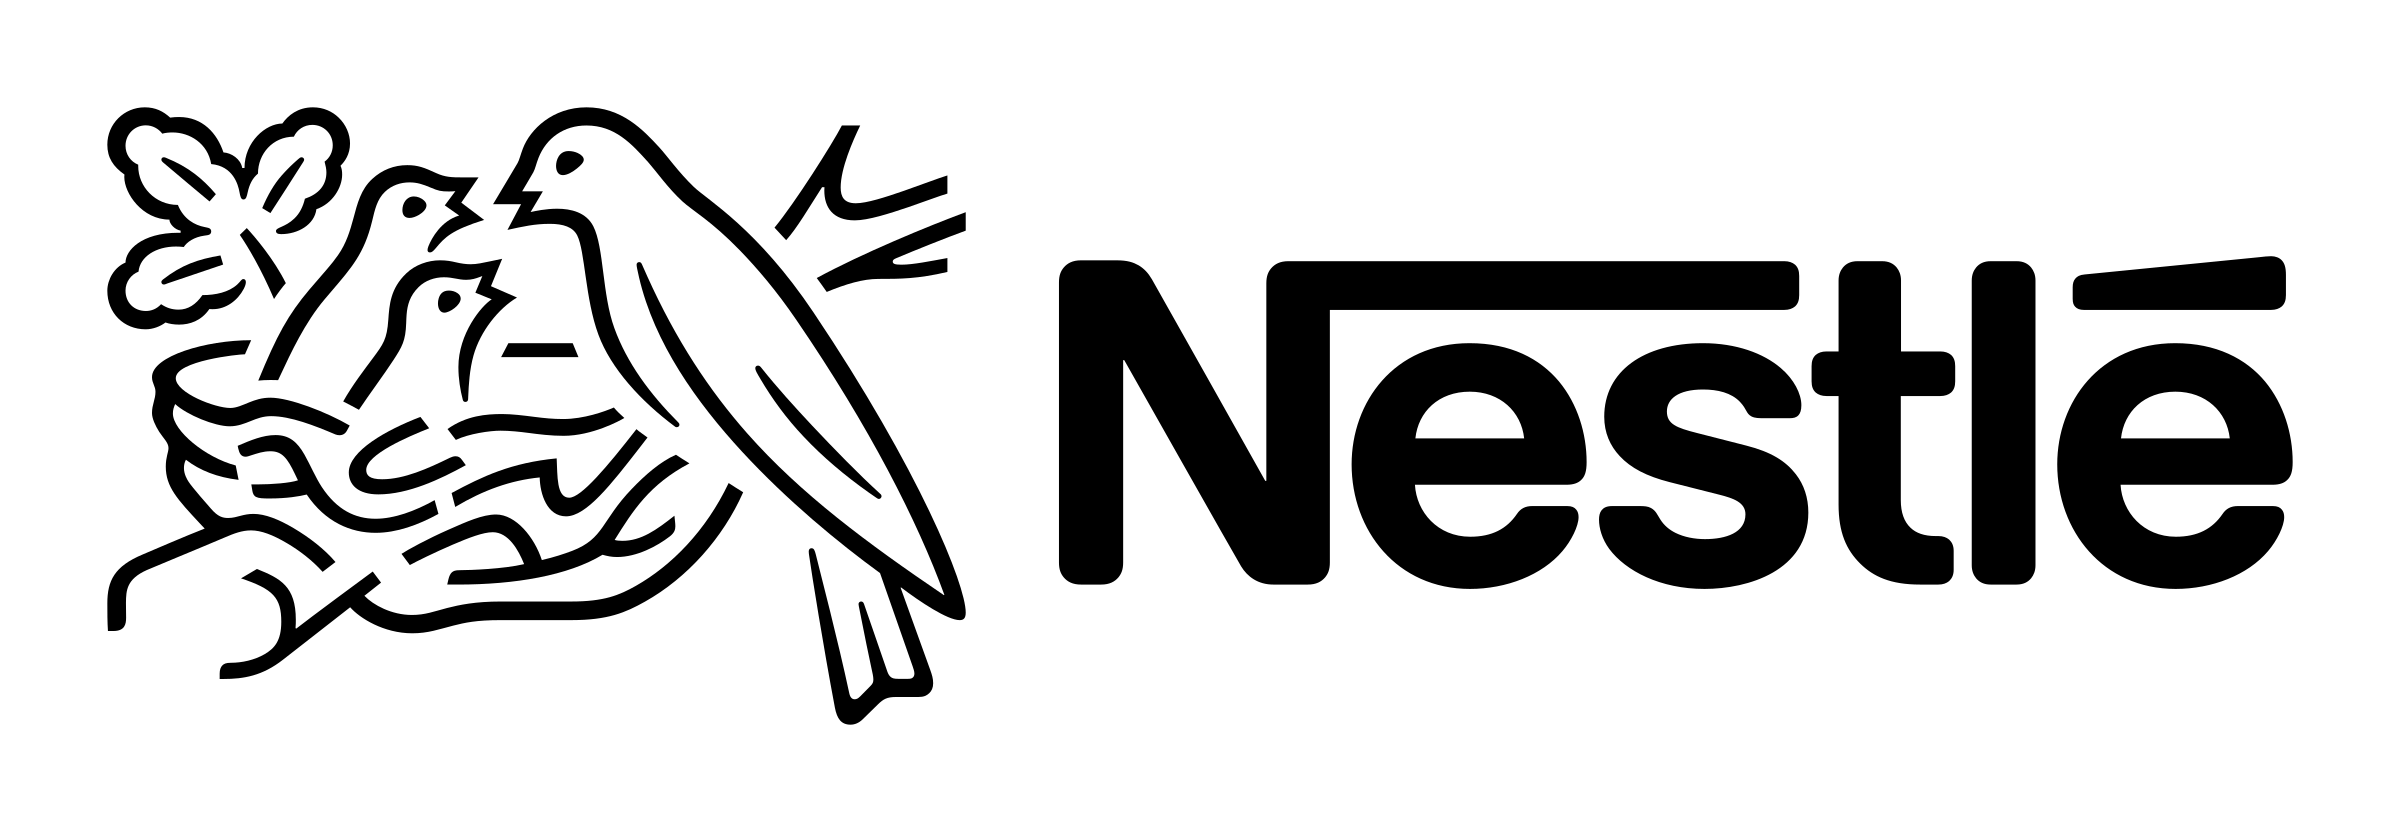 nestle-logo-black-and-white